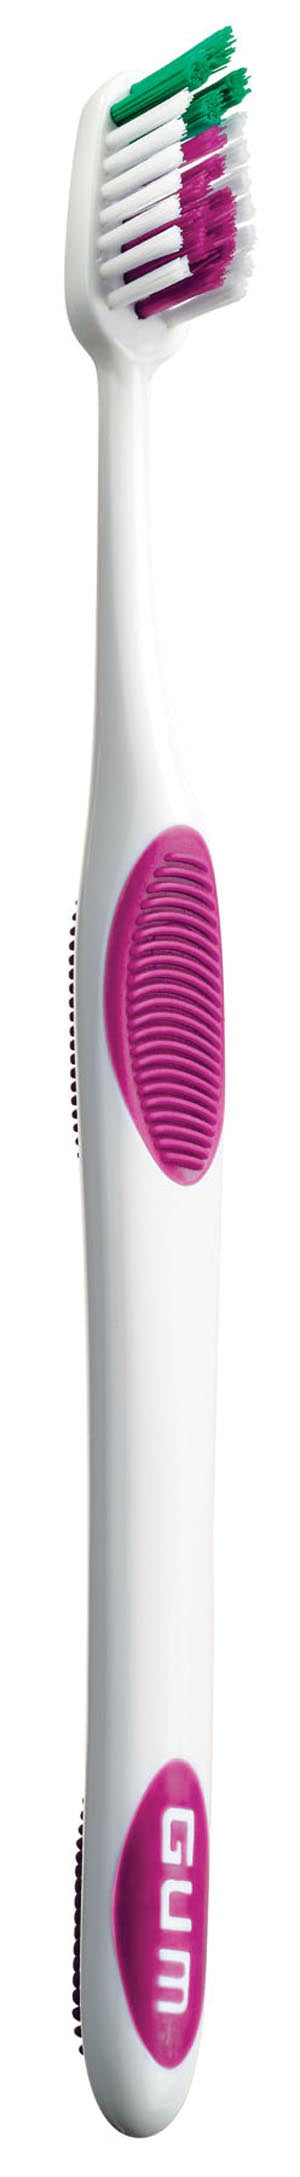 Sunstar Gum® Adult Toothbrush. Supertip® Toothbrush, Soft Bristles, Compact Head, 1 Dz/Bx (Old